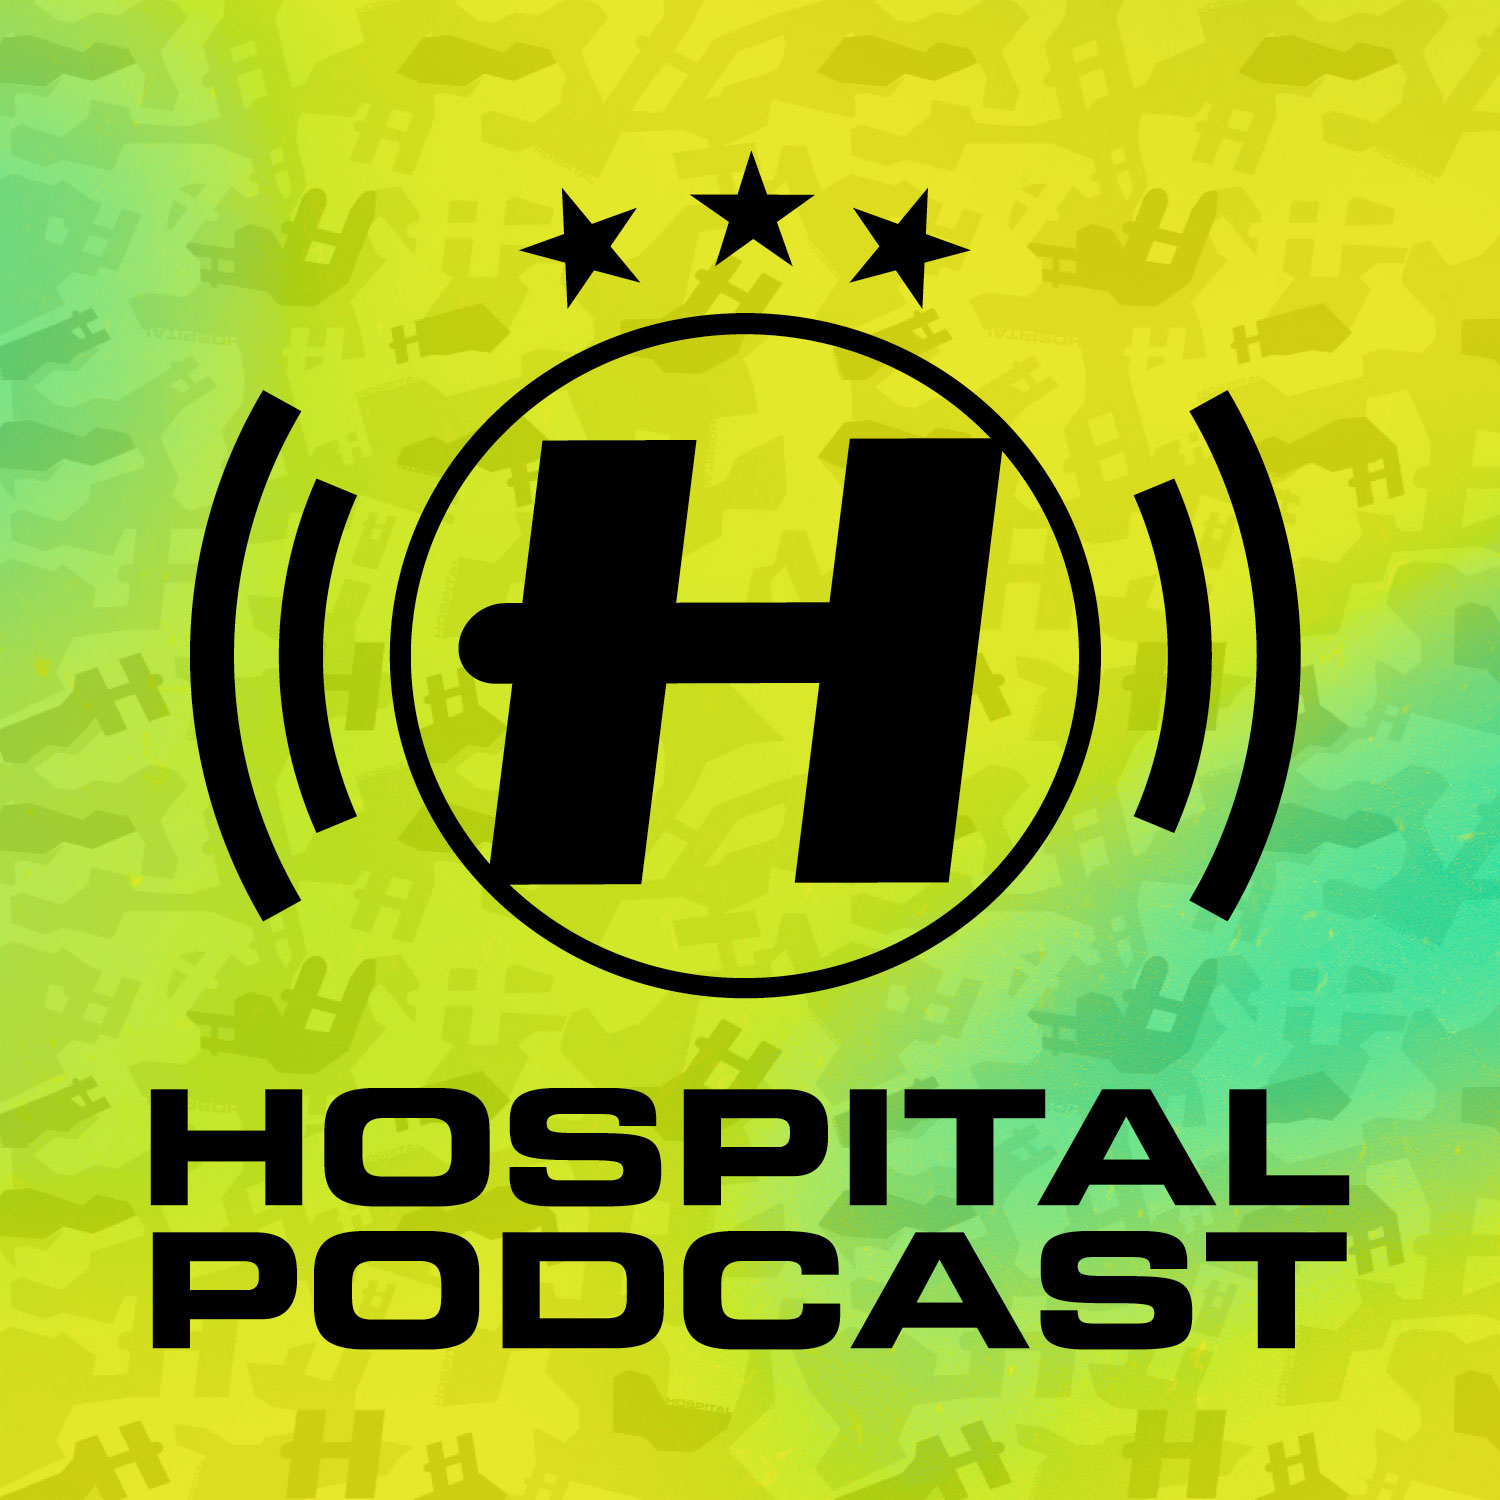 Hospital Podcast 391 with London Elektricity Artwork